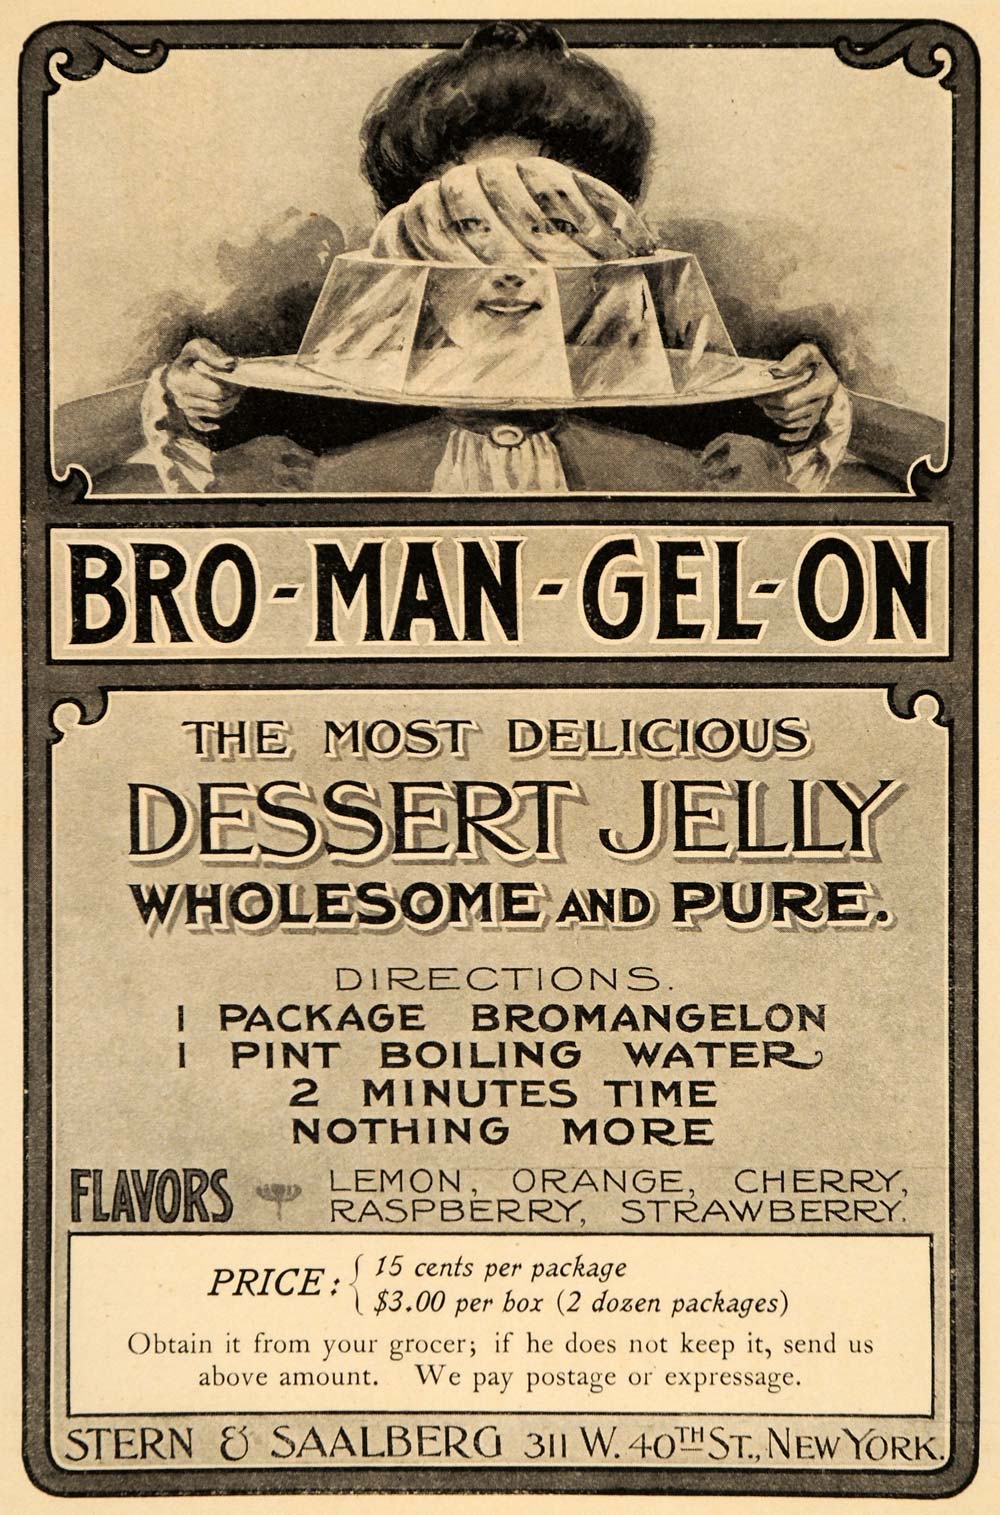 1900 Ad Stern Saalberg Bro-Man-Gel-On Dessert Jelly - ORIGINAL ADVERTISING LHJ4